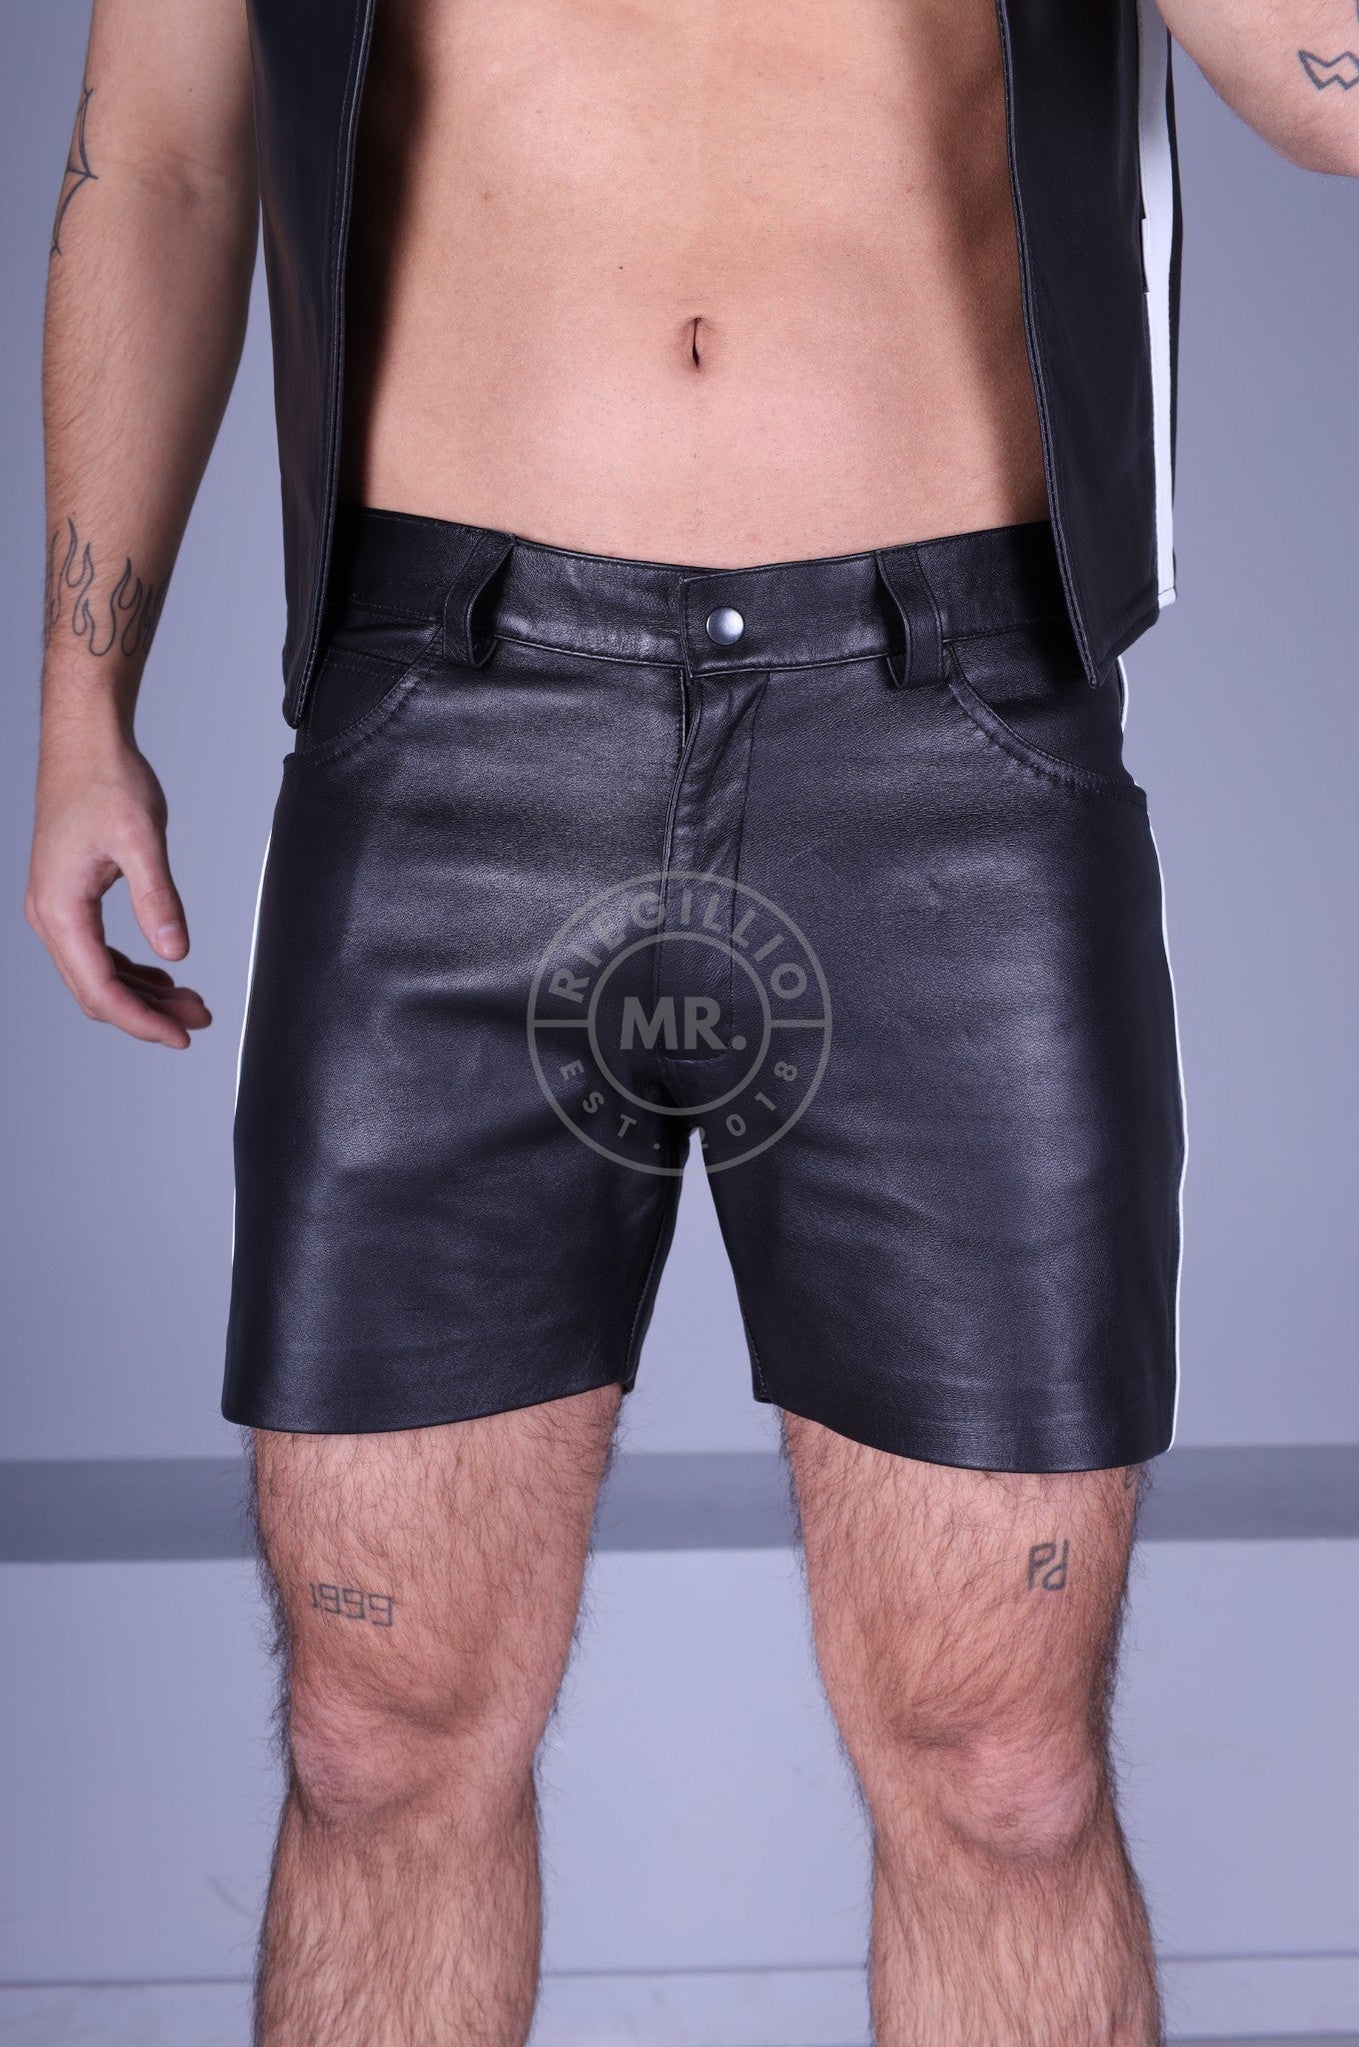 Black Leather 5 Pocket Short - White Stripe at MR. Riegillio